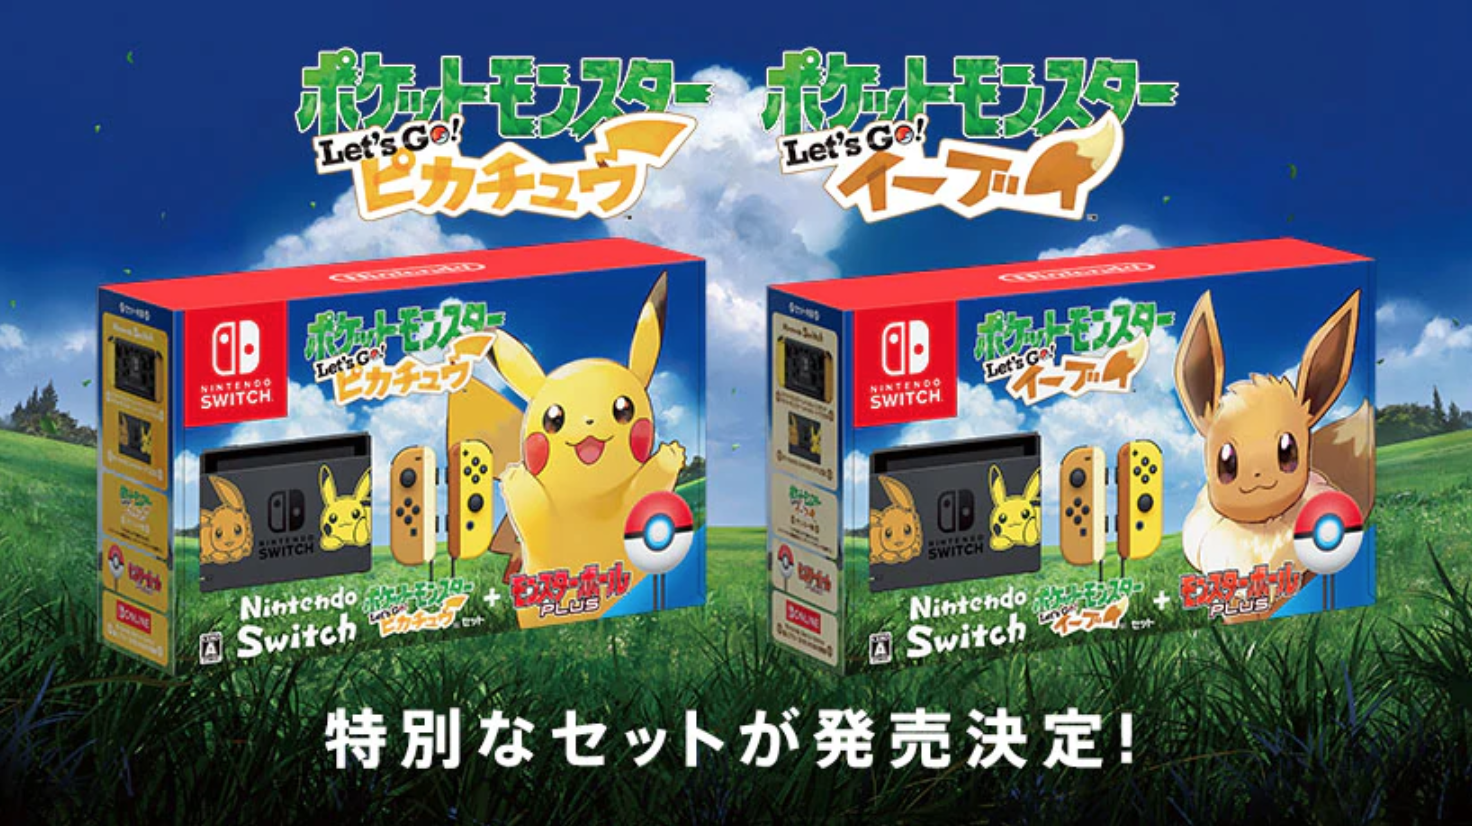 Гоу джой. Nintendo Switch Japan Version блок питание. Ray Swich. Let's go! To Japan.